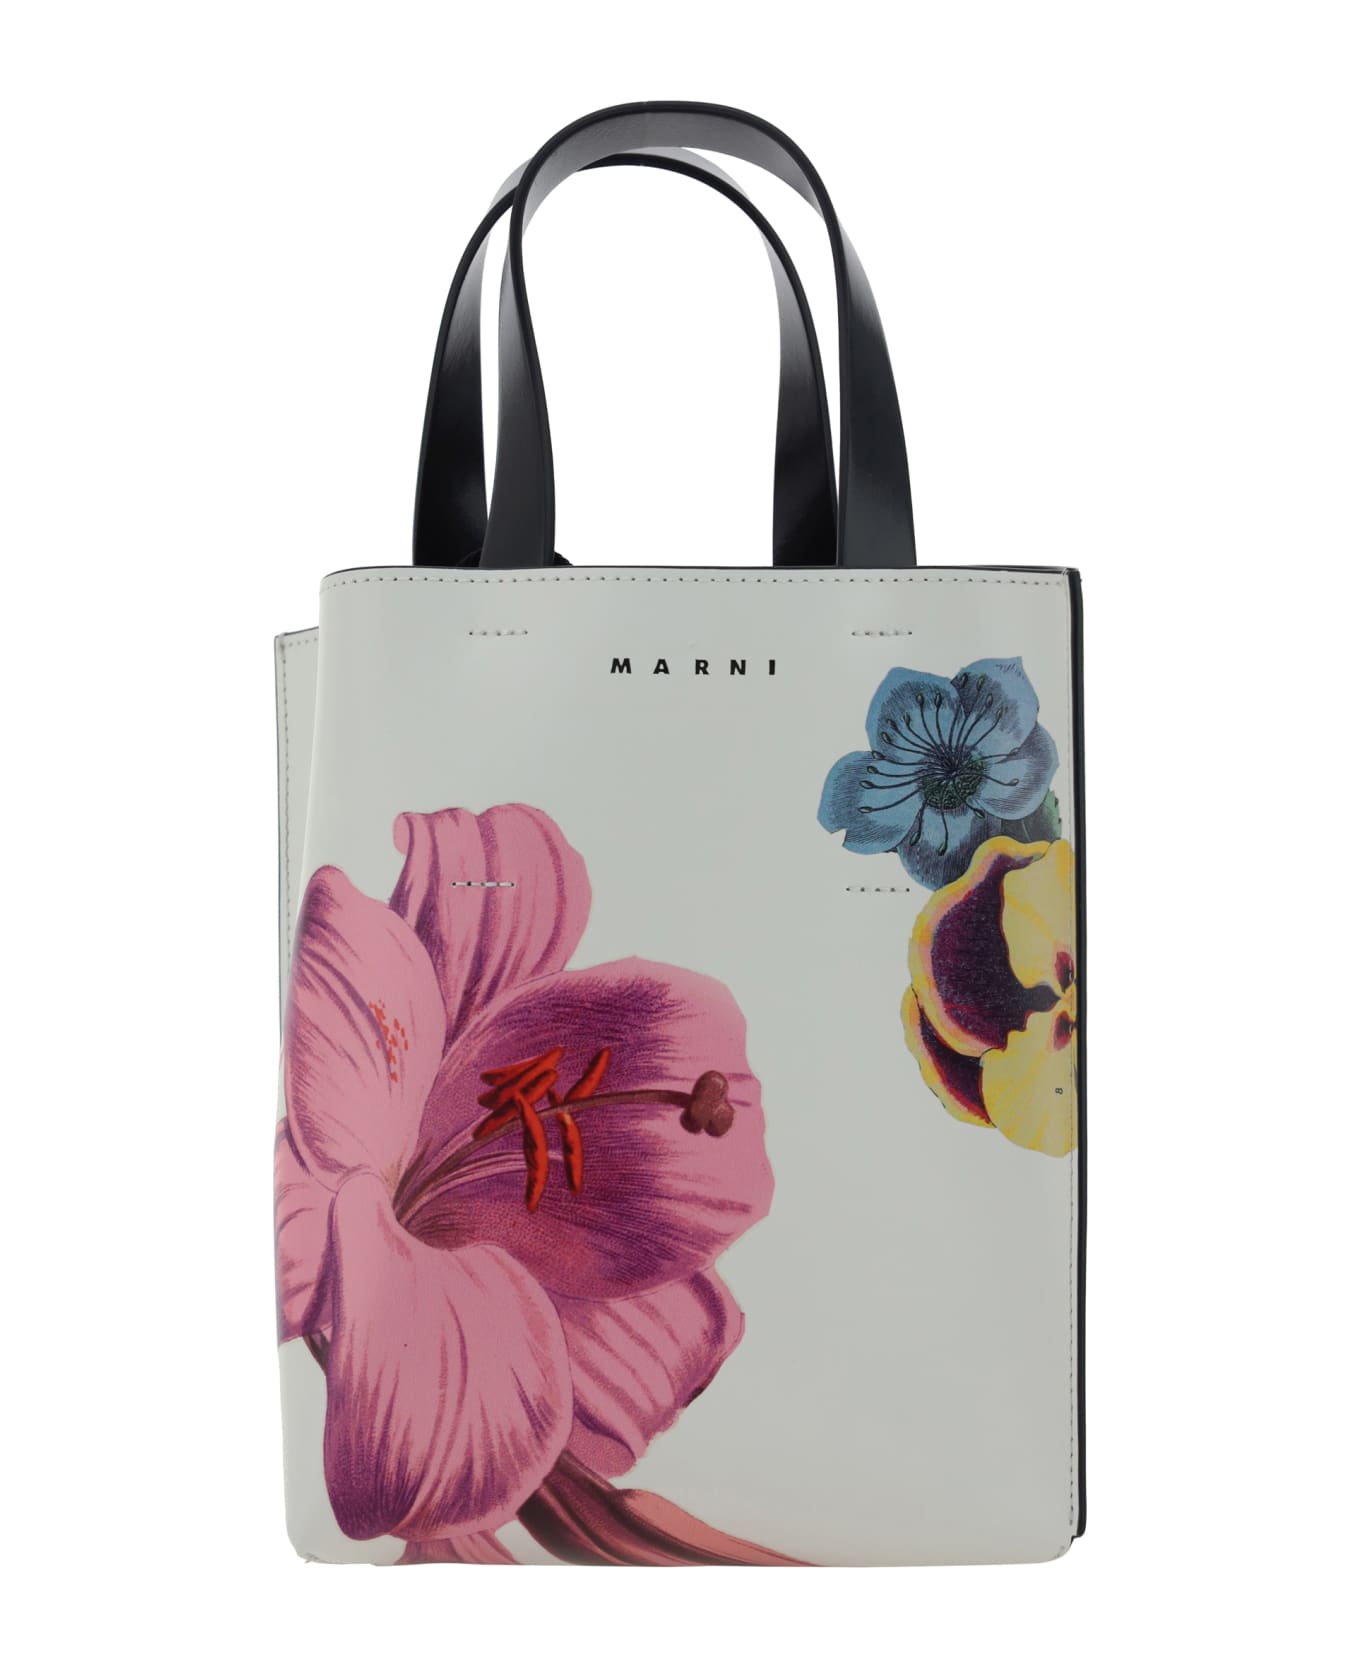 Marni Tote Handbag - Lily White/pink/black